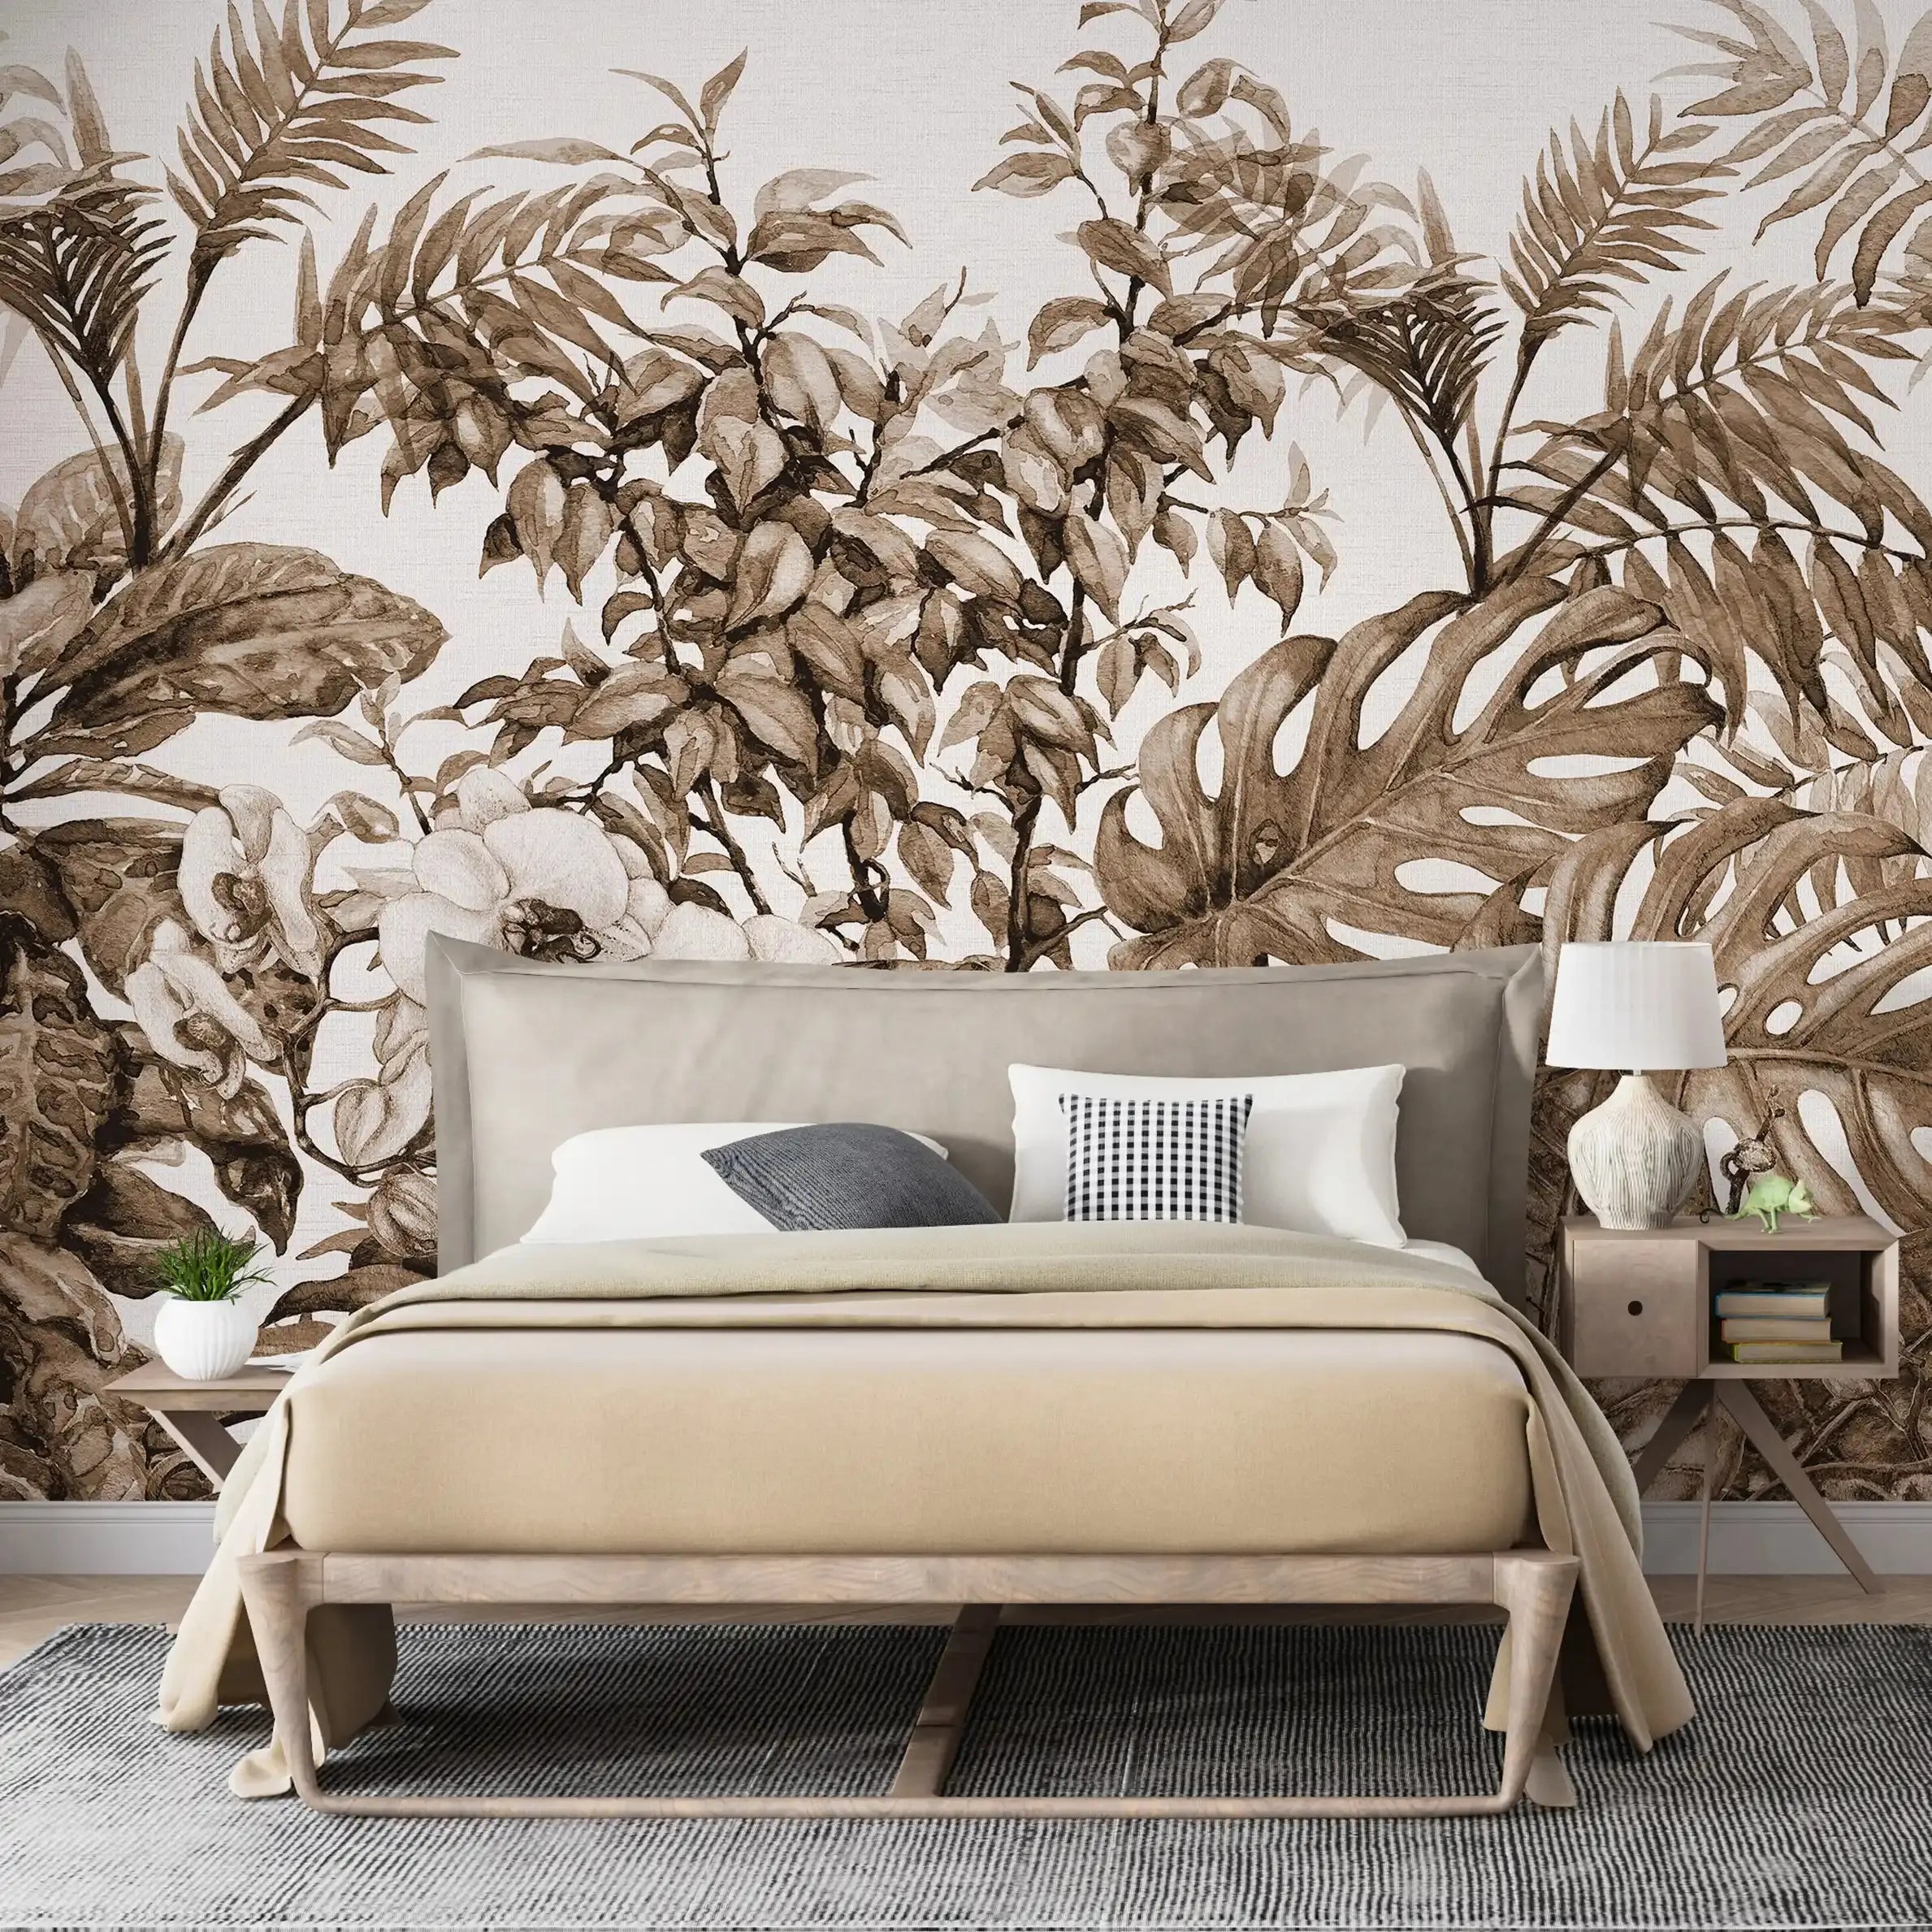 3052-D / Botanical Peel and Stick Wallpaper - Tropical, Brown Watercolor Plant Design, Easy Install, Removable Wallpaper for Bathroom & Bedroom Decor - Artevella